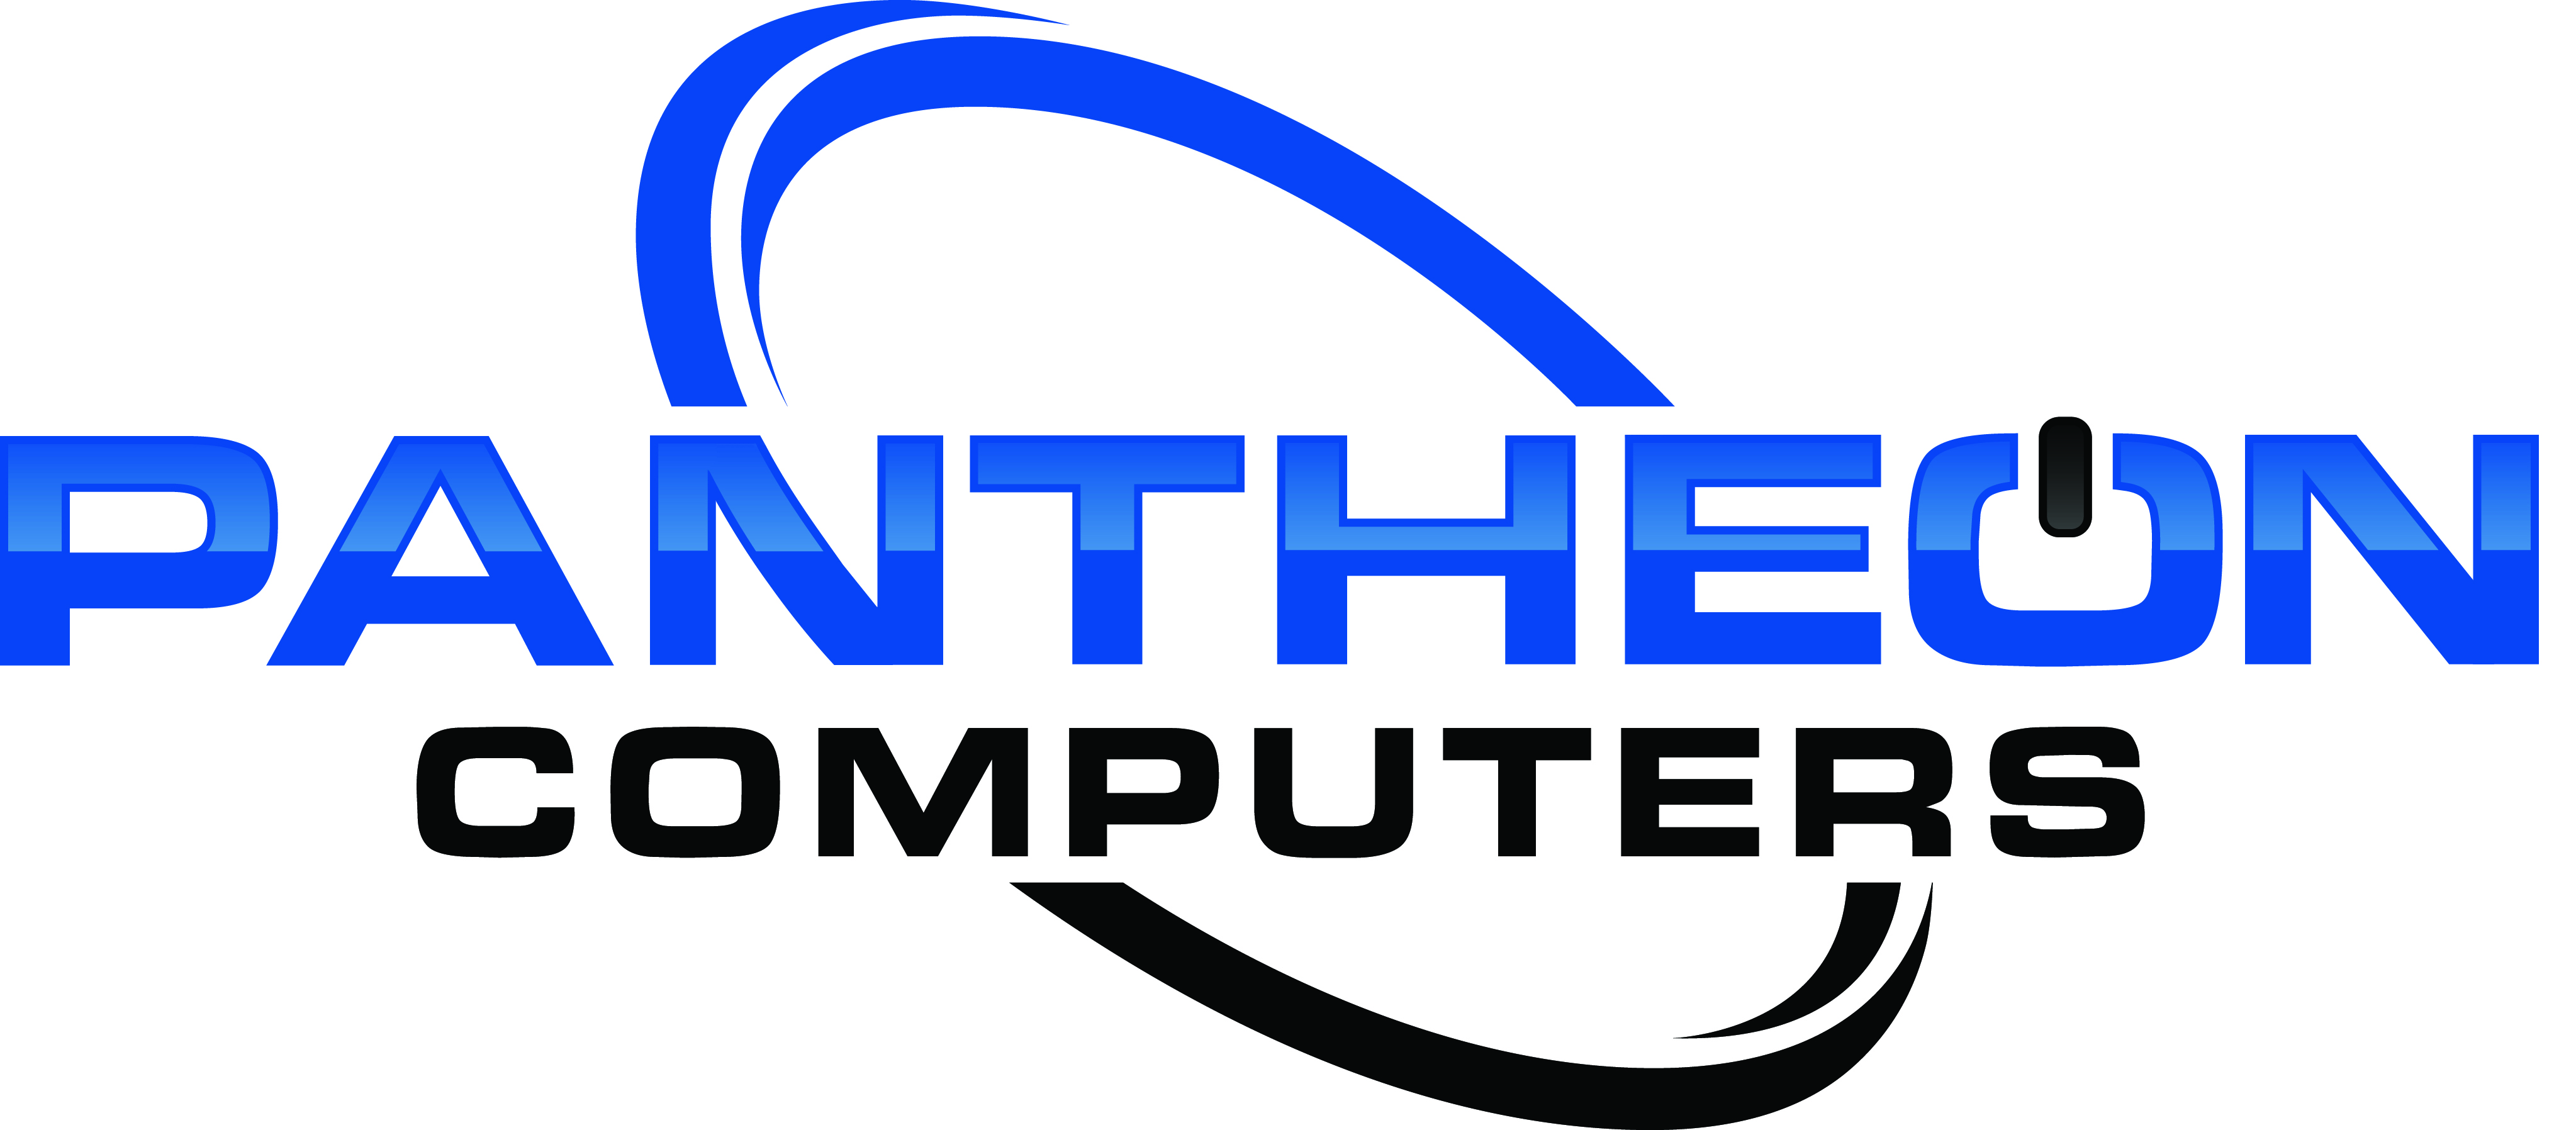 Pantheon Computers